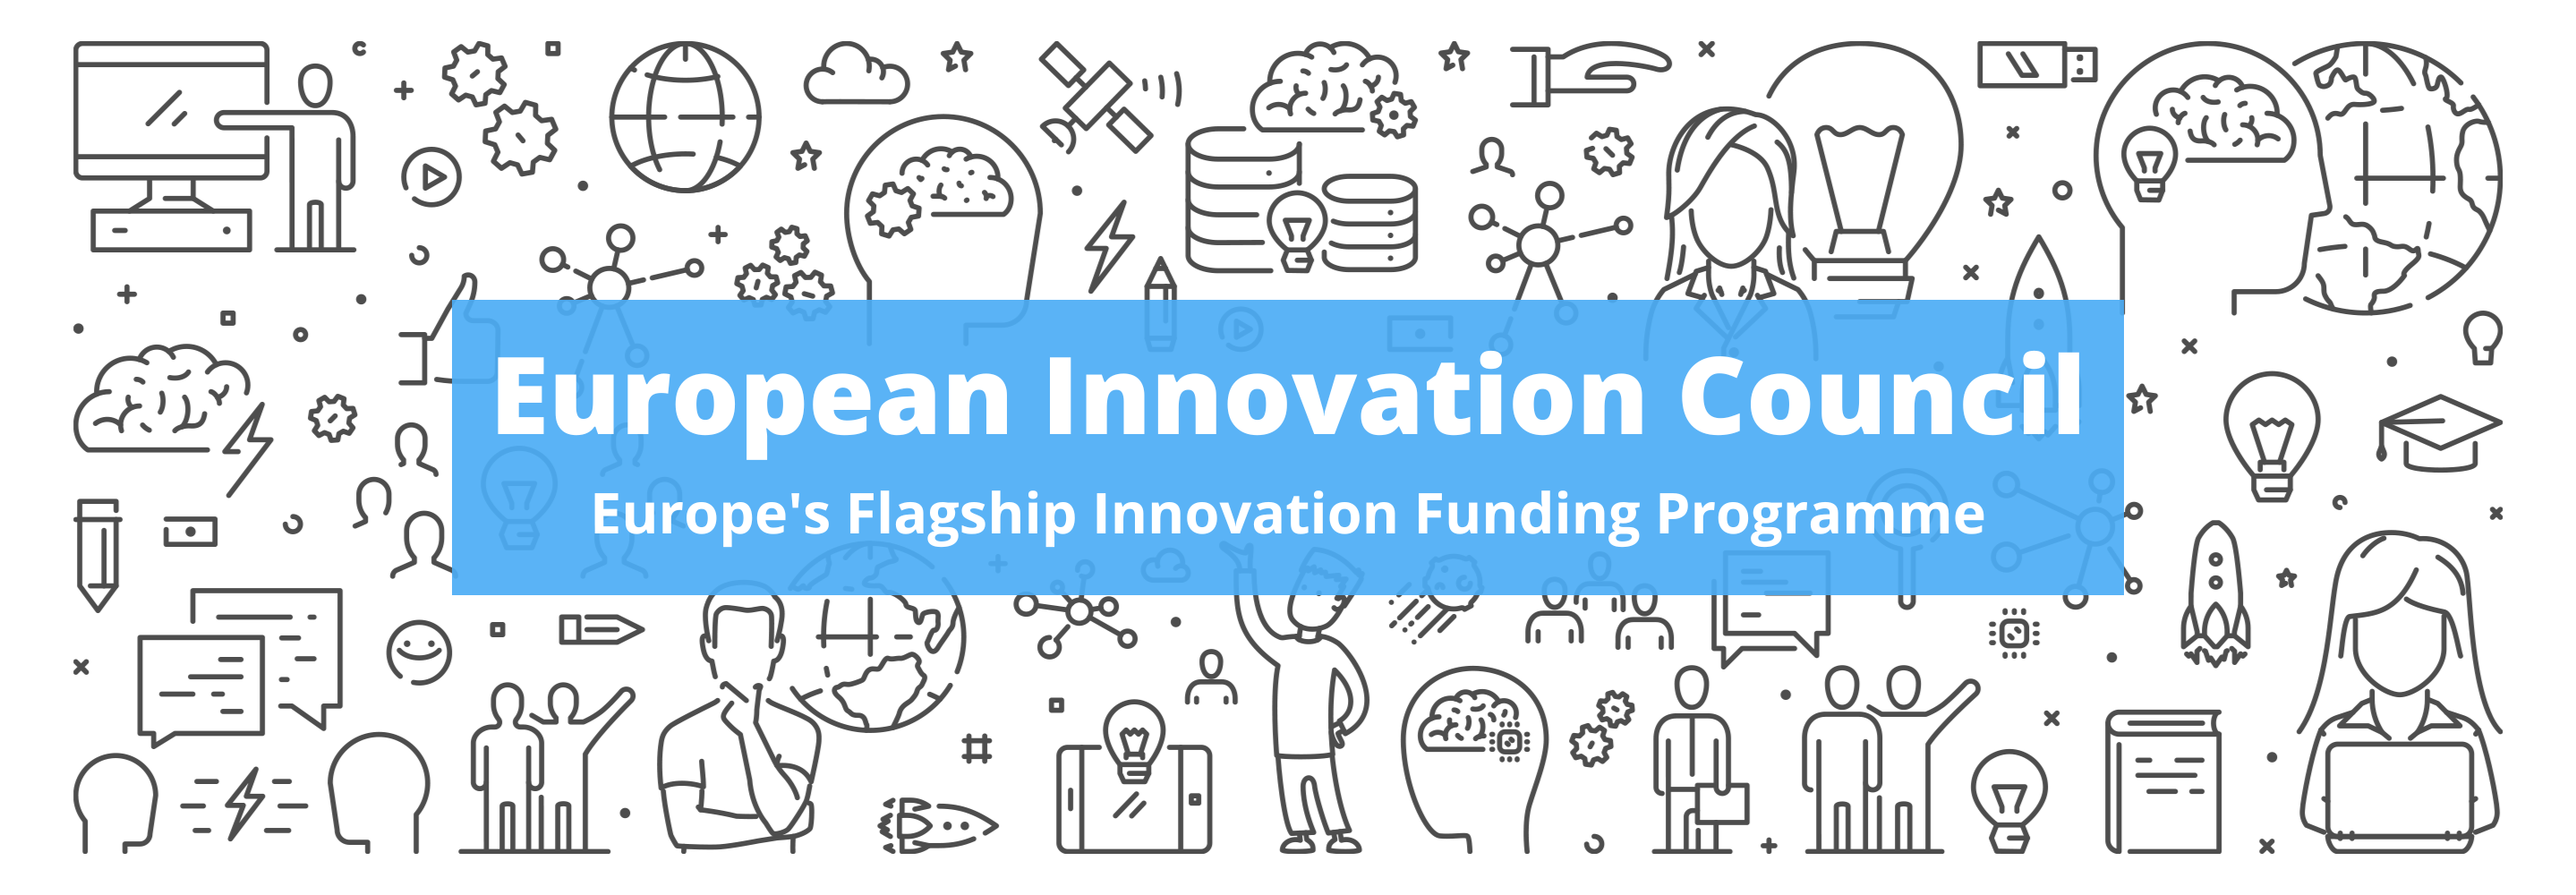 European Innovation Council - Flagship Programme